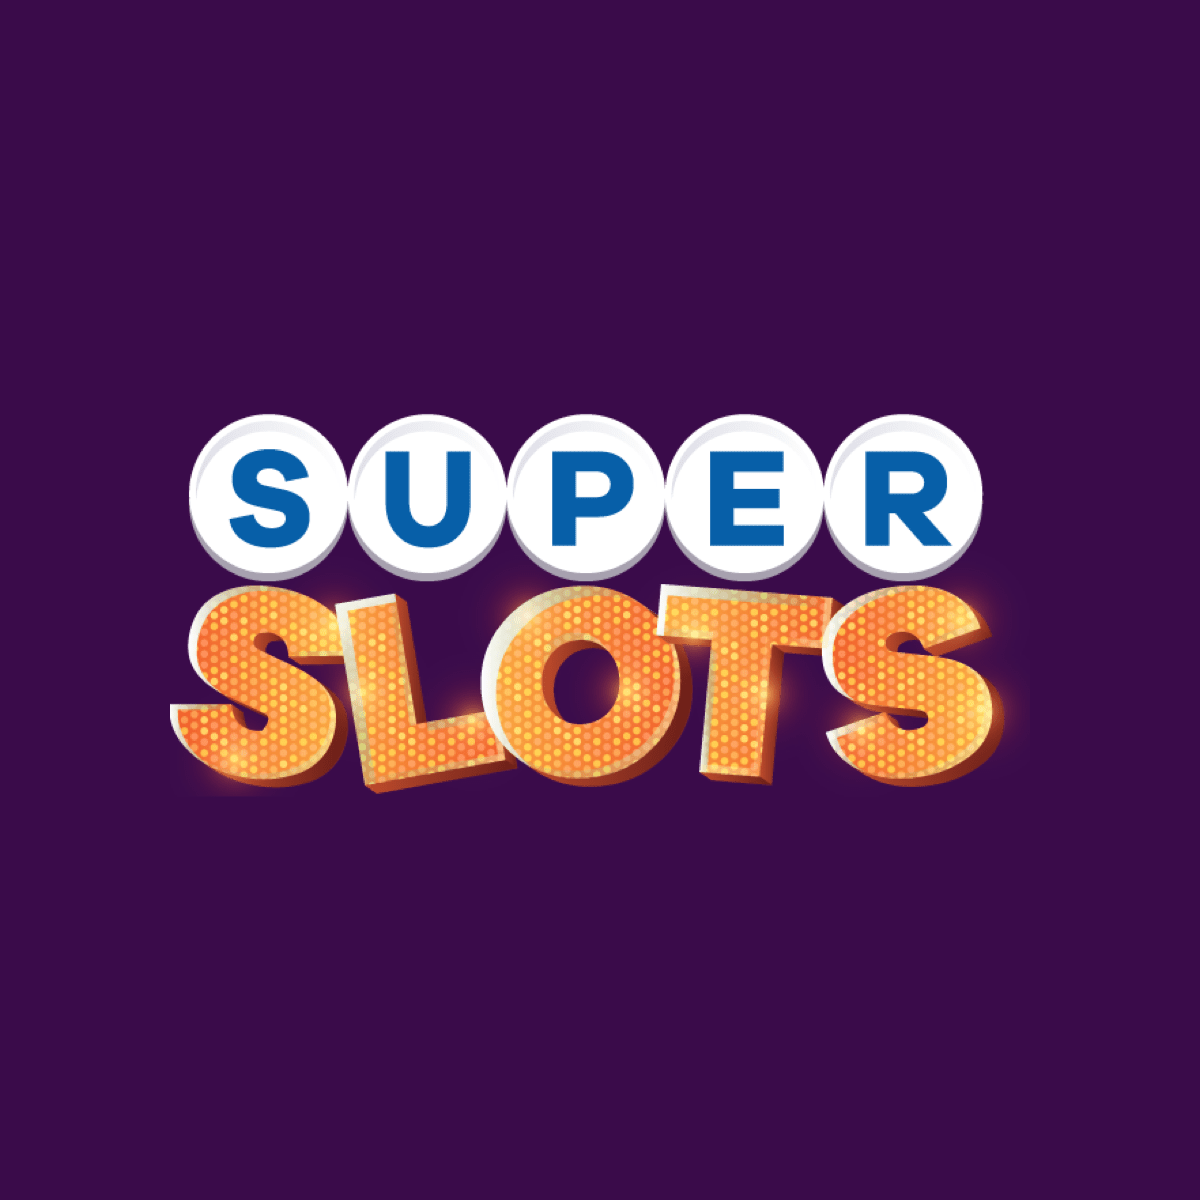 super slots bonus codes